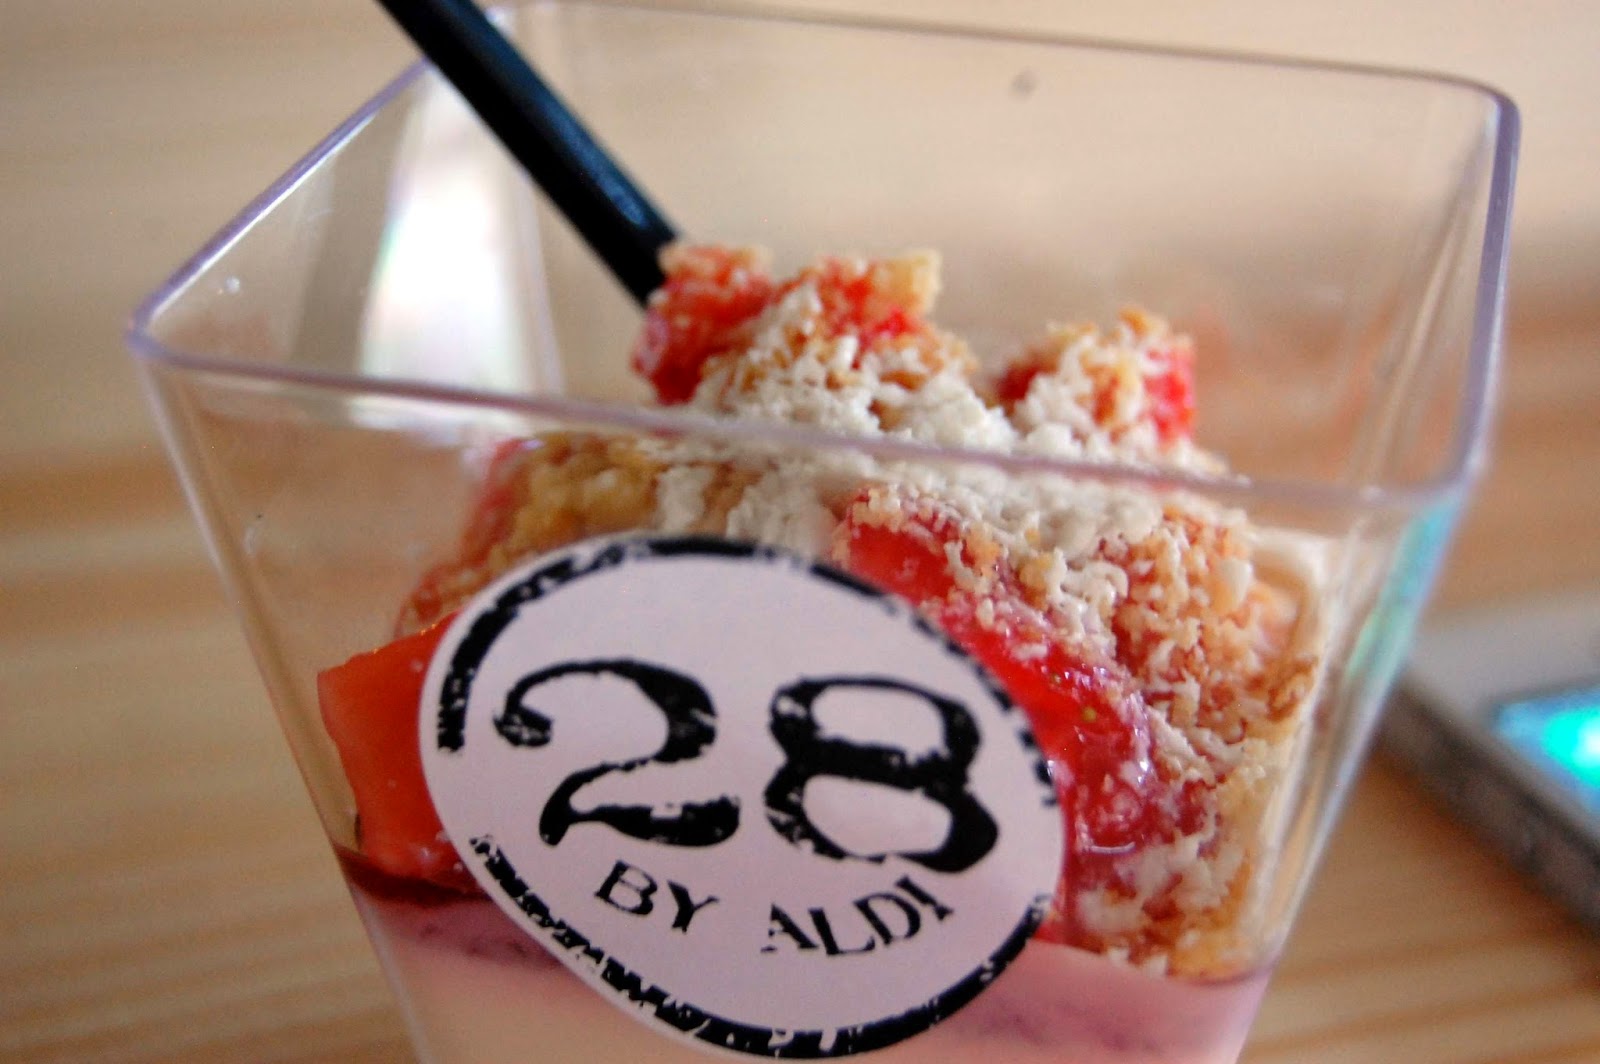 Stitch & Bear - Taste of Dublin 2014 - Strawberry and basil dessert